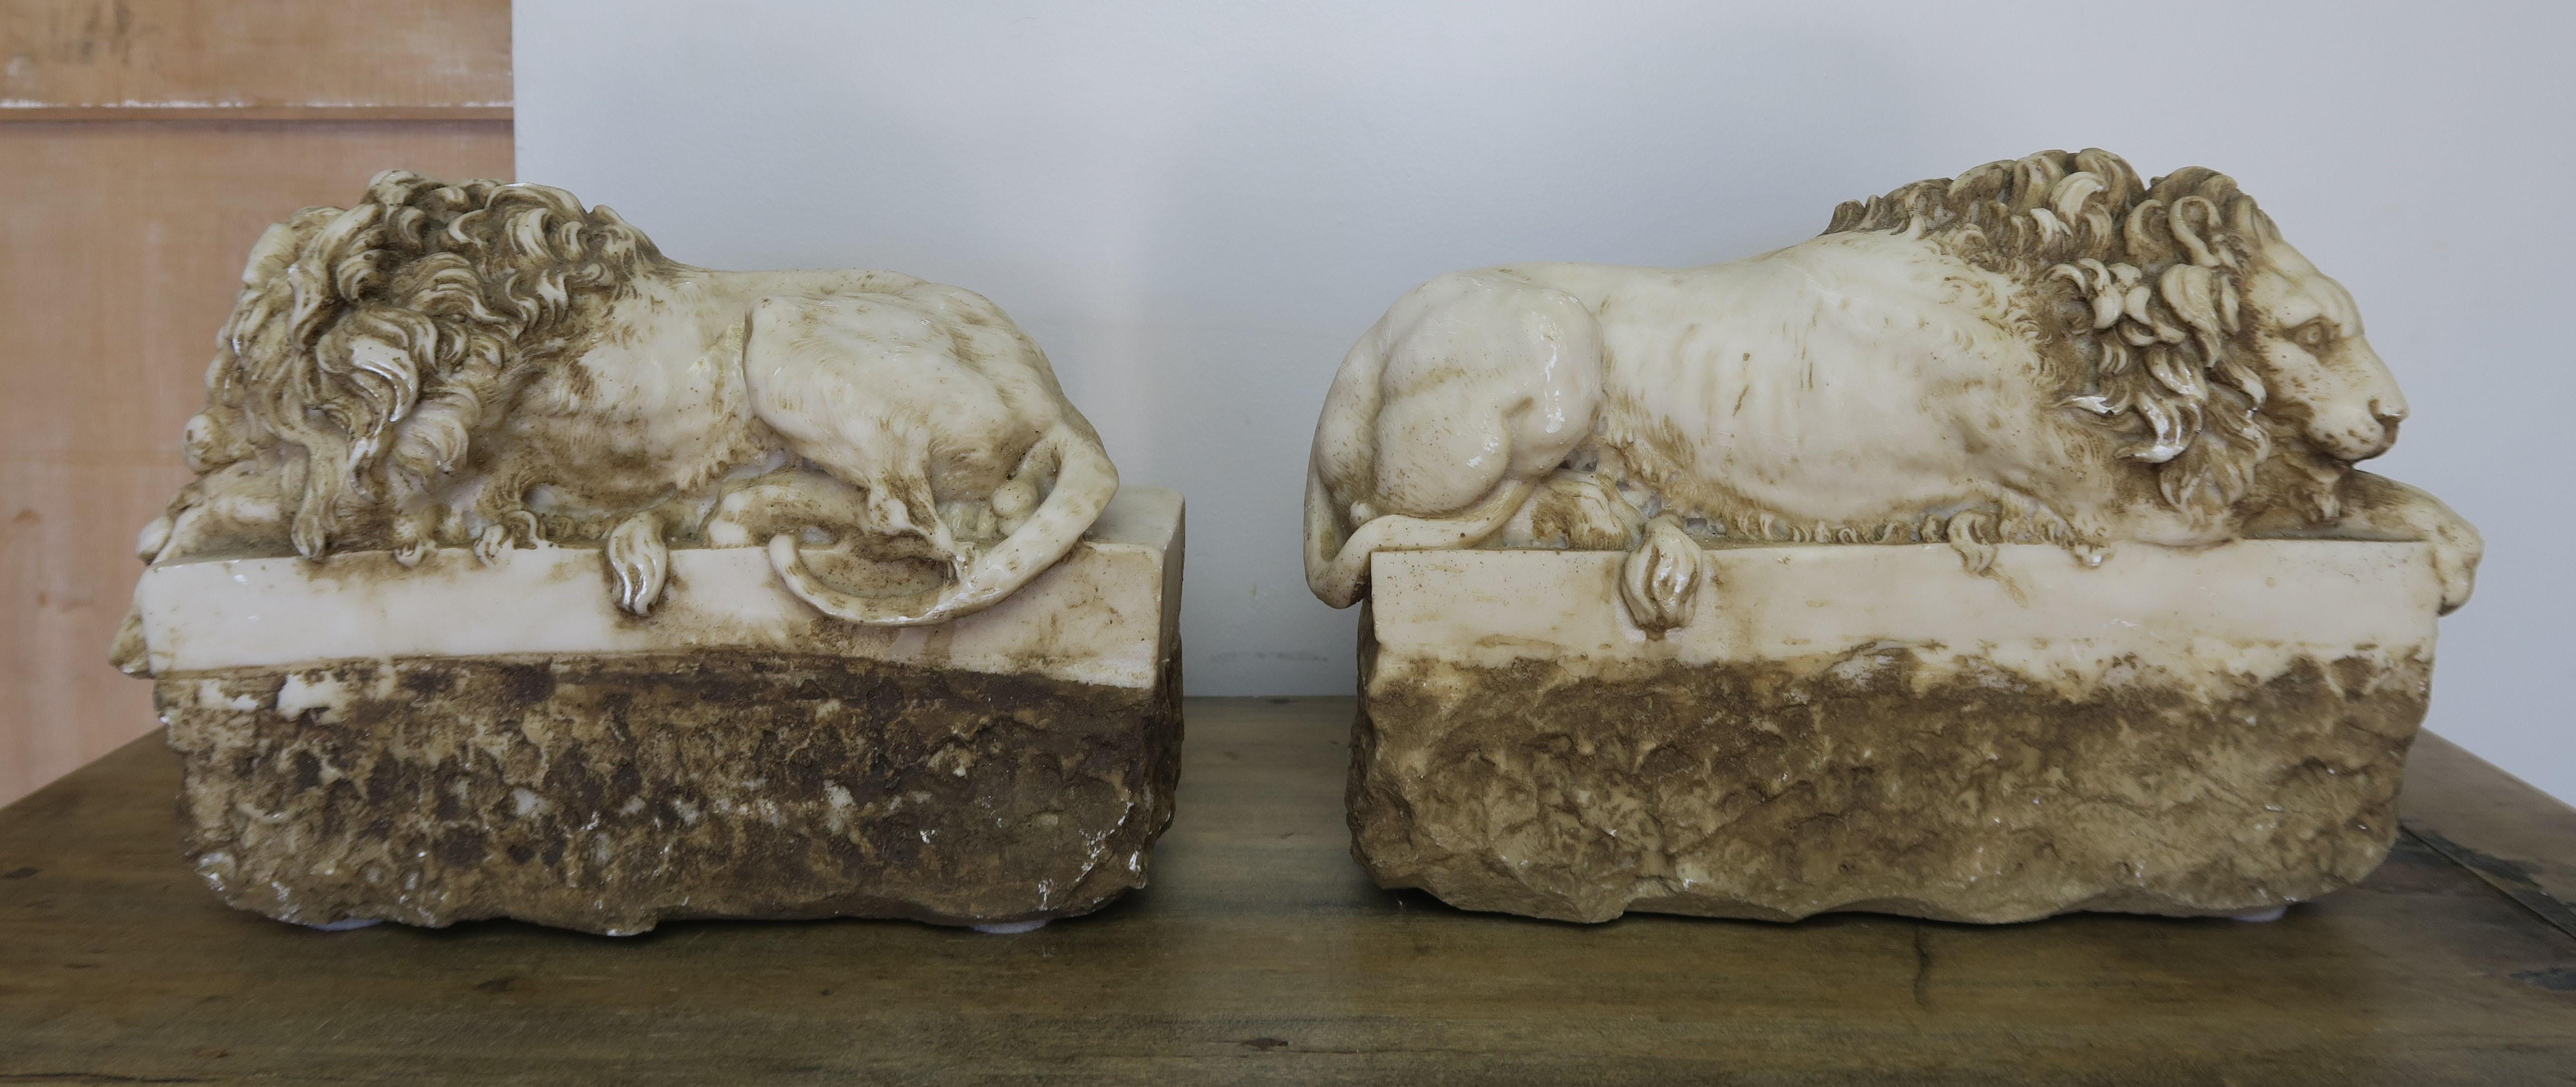 Renaissance Pair of Carved Stone Replica Lions originally by Antonio Canova